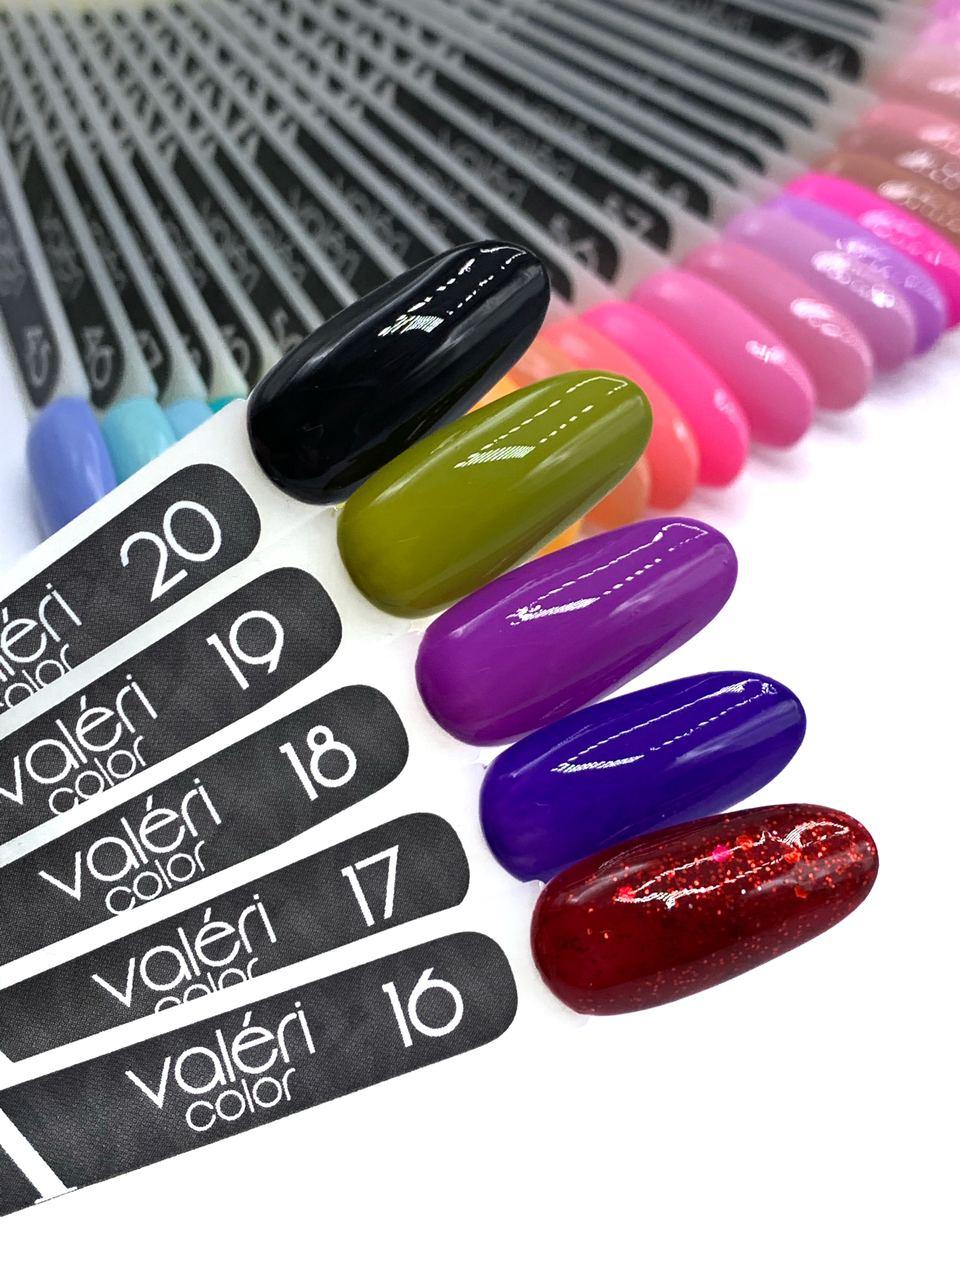 Гель лак для нігтів Valeri Color №020 (чорний) 6 мл